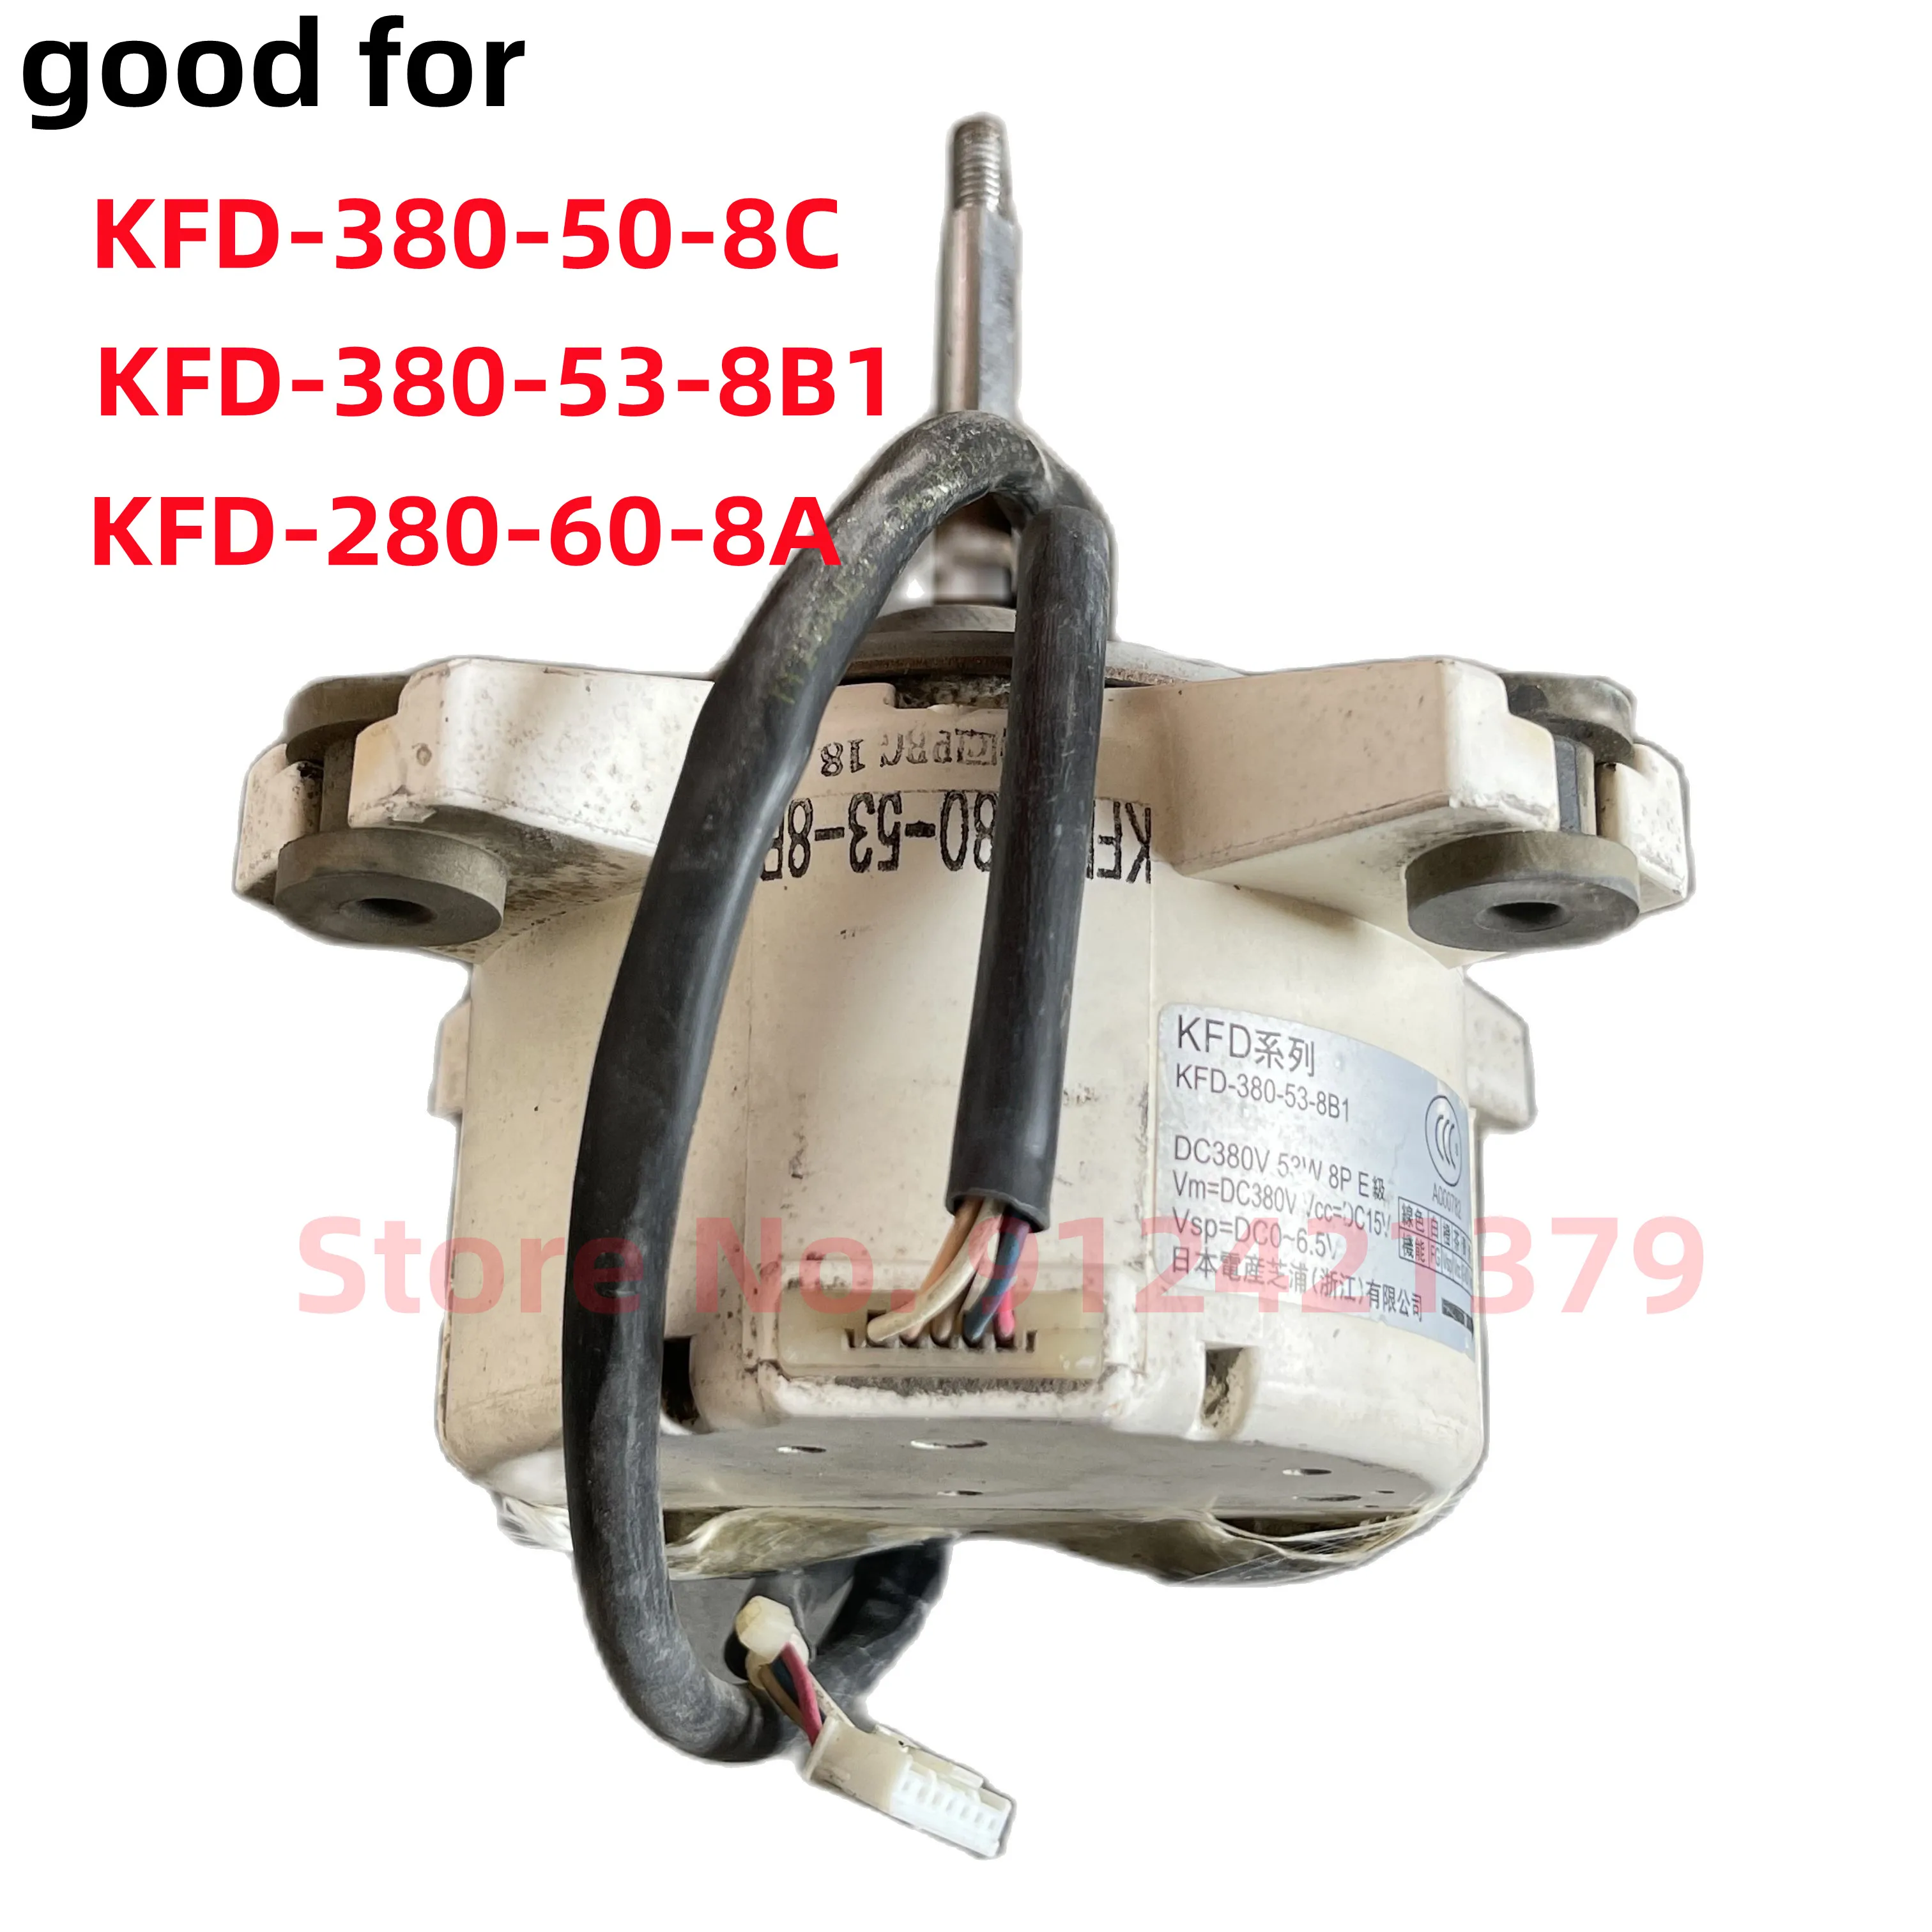 

good for daikin Air conditioner Fan motor KFD-380-50-8C 3MXS80EV2C KFD-380-53-8B1 RXD50CMVMC KFD-280-60-8A RZQH72MV2C part